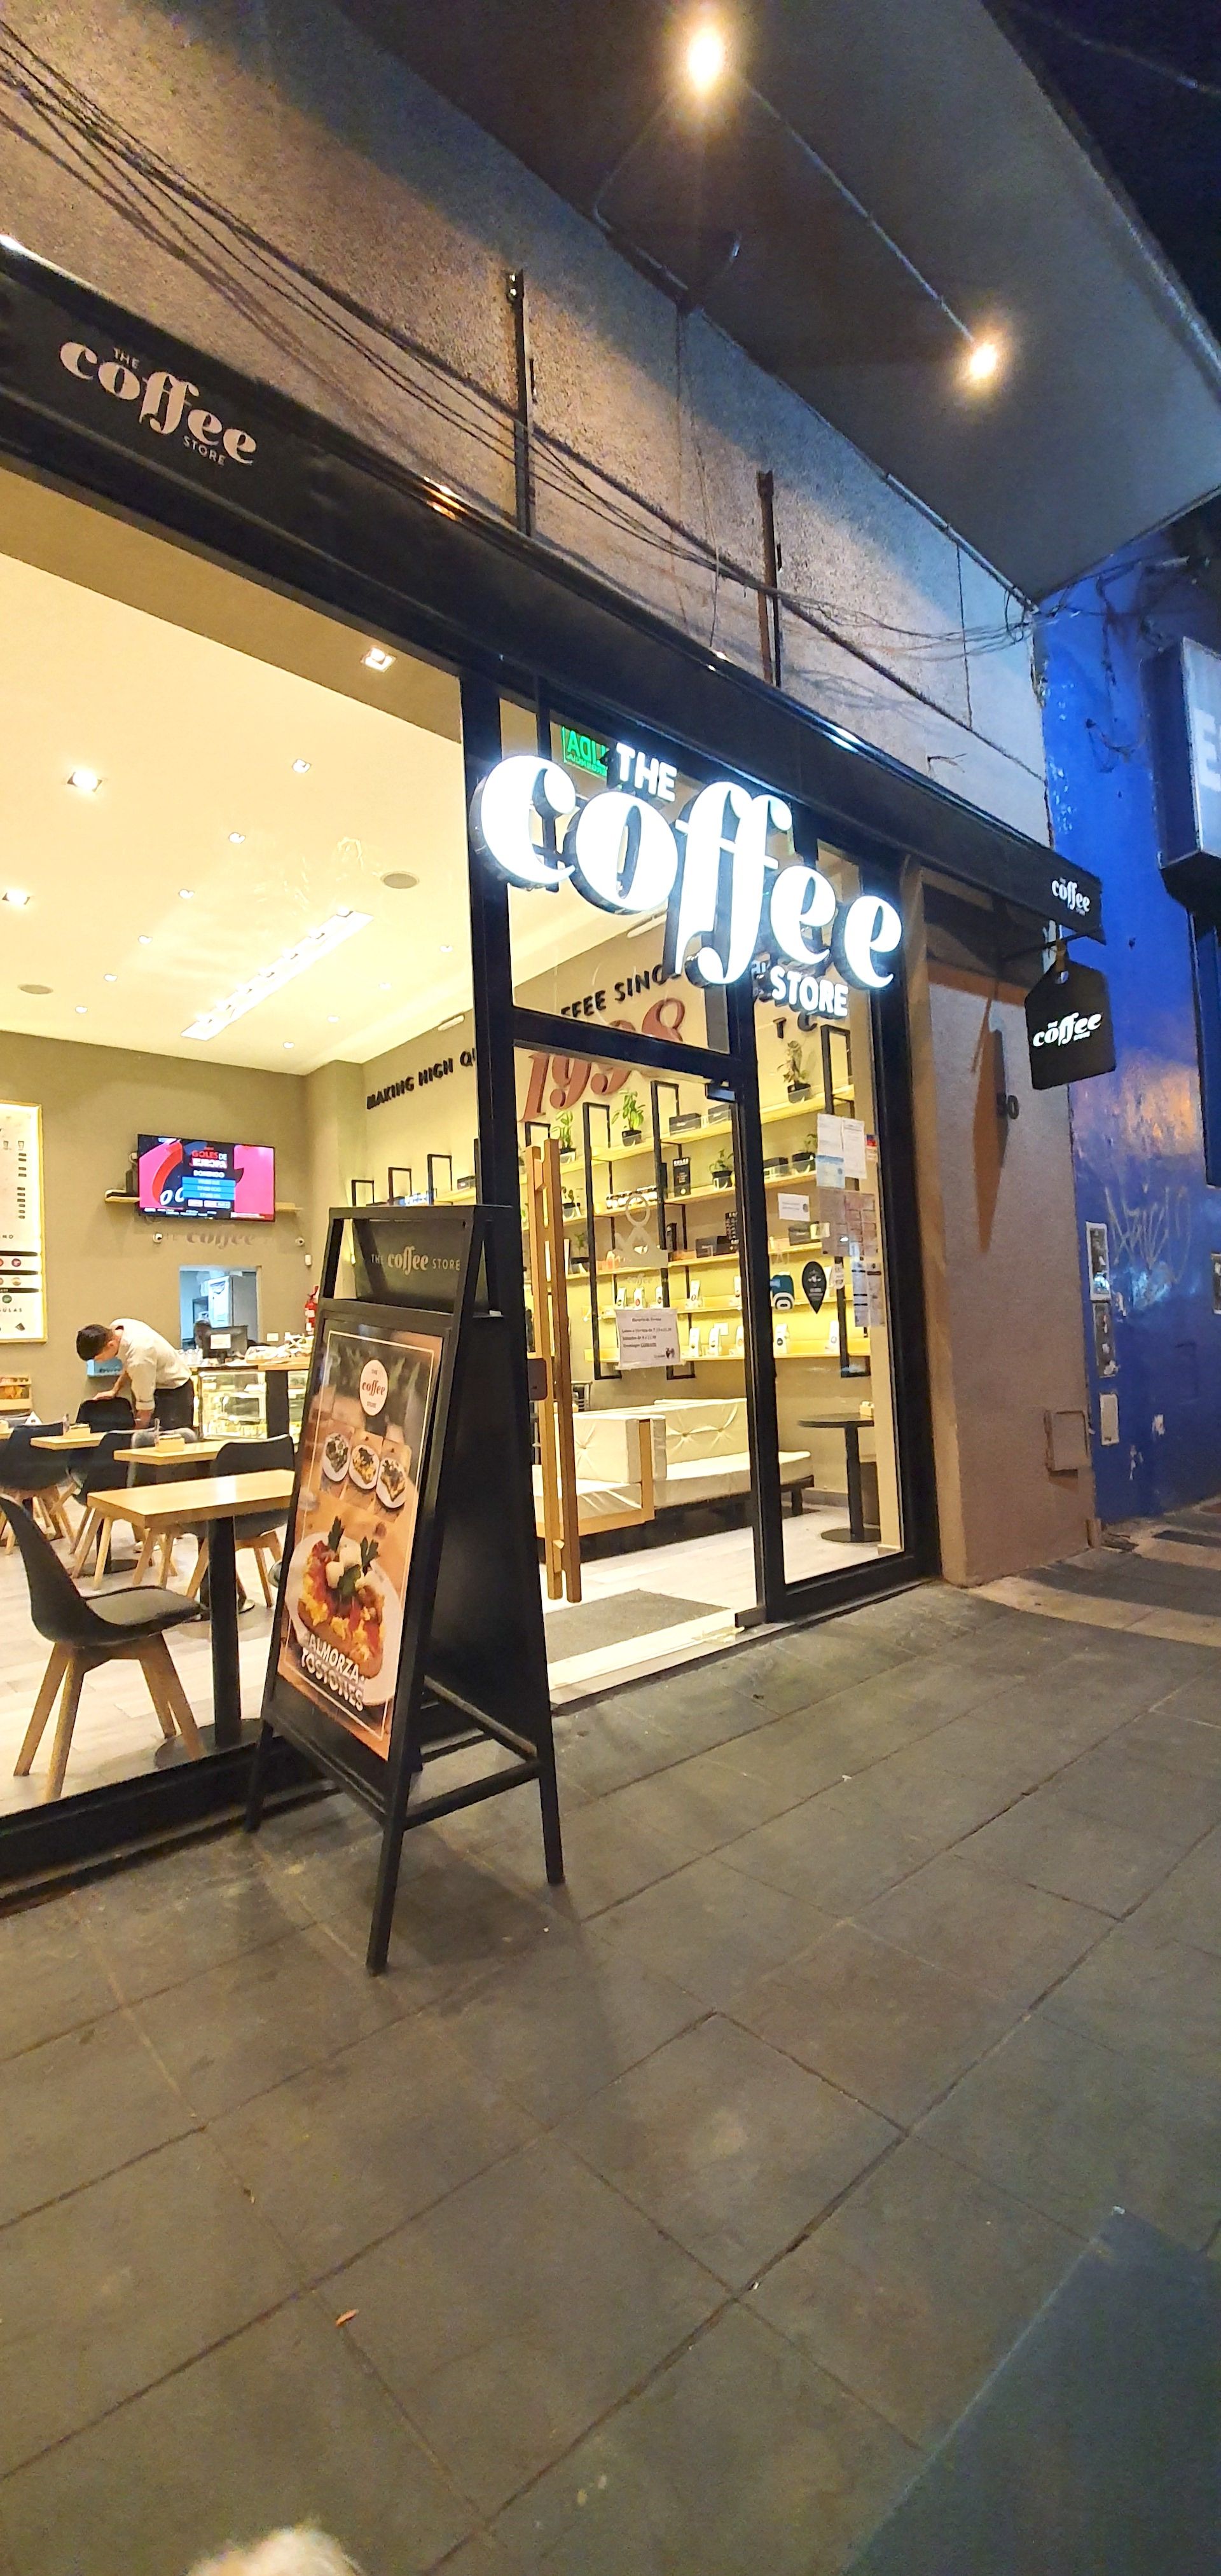 The Coffee Store Ramos Mejia